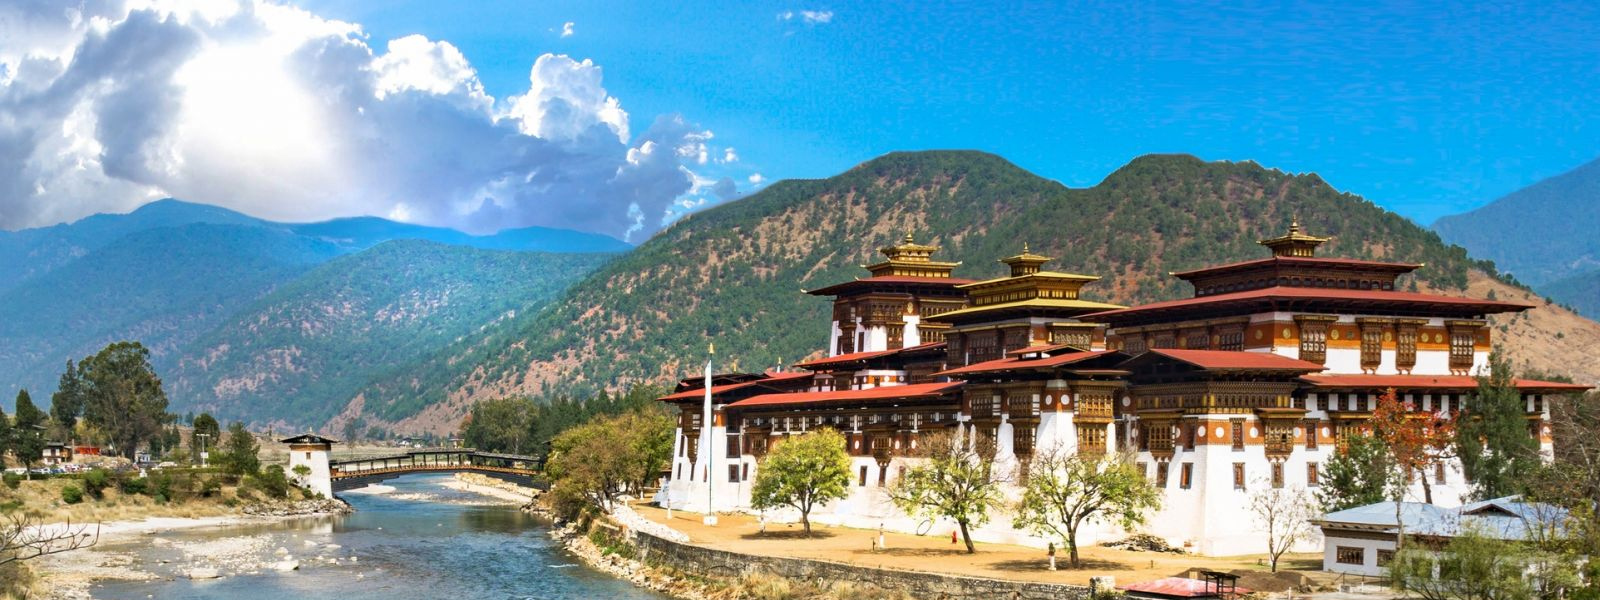 Bhutan Tour - 3 Days